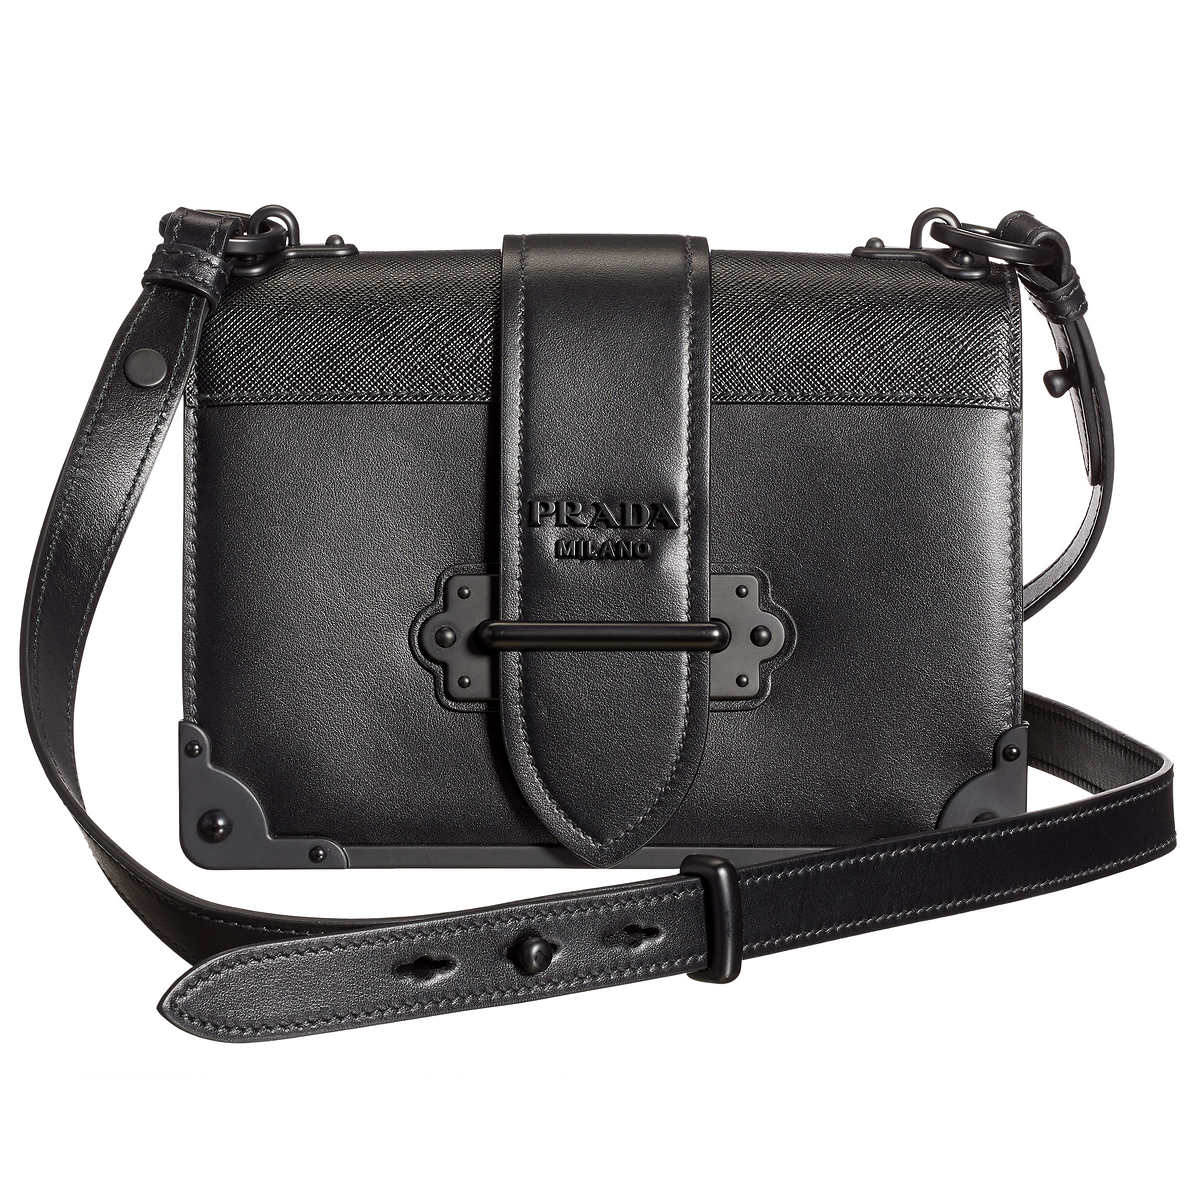 Prada Black Leather Cahier Flap Shoulder Bag Prada